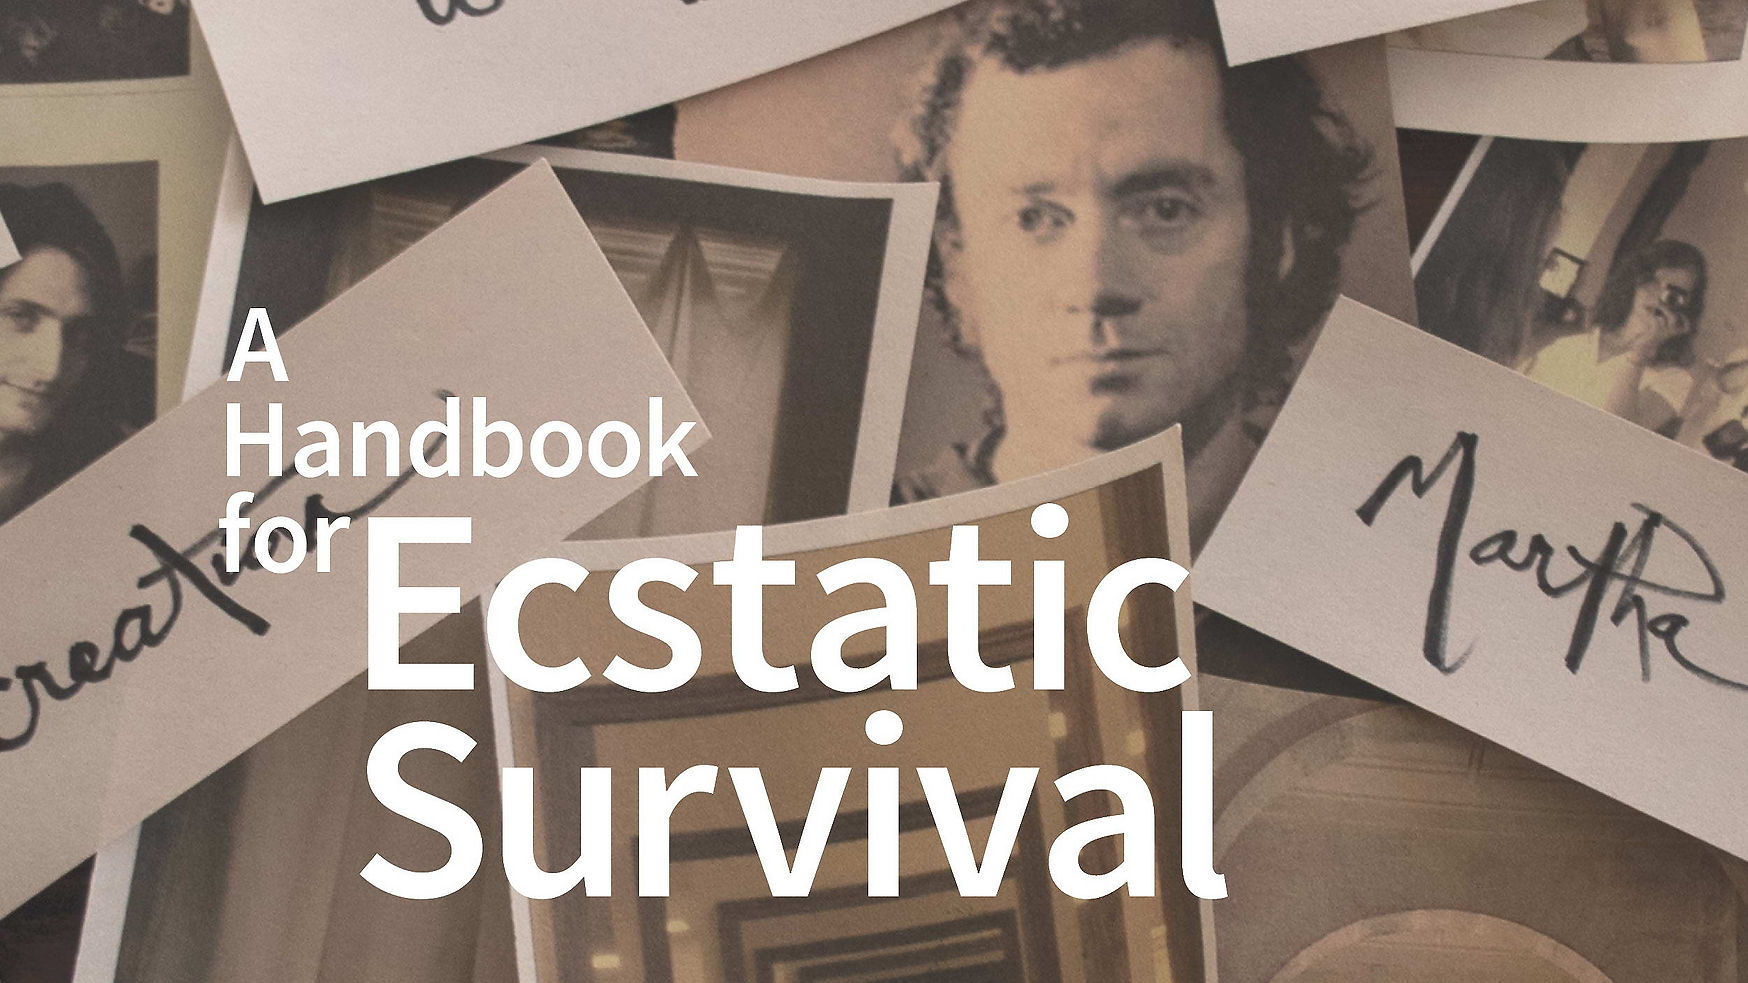 "A Handbook for Ecstatic Survival"